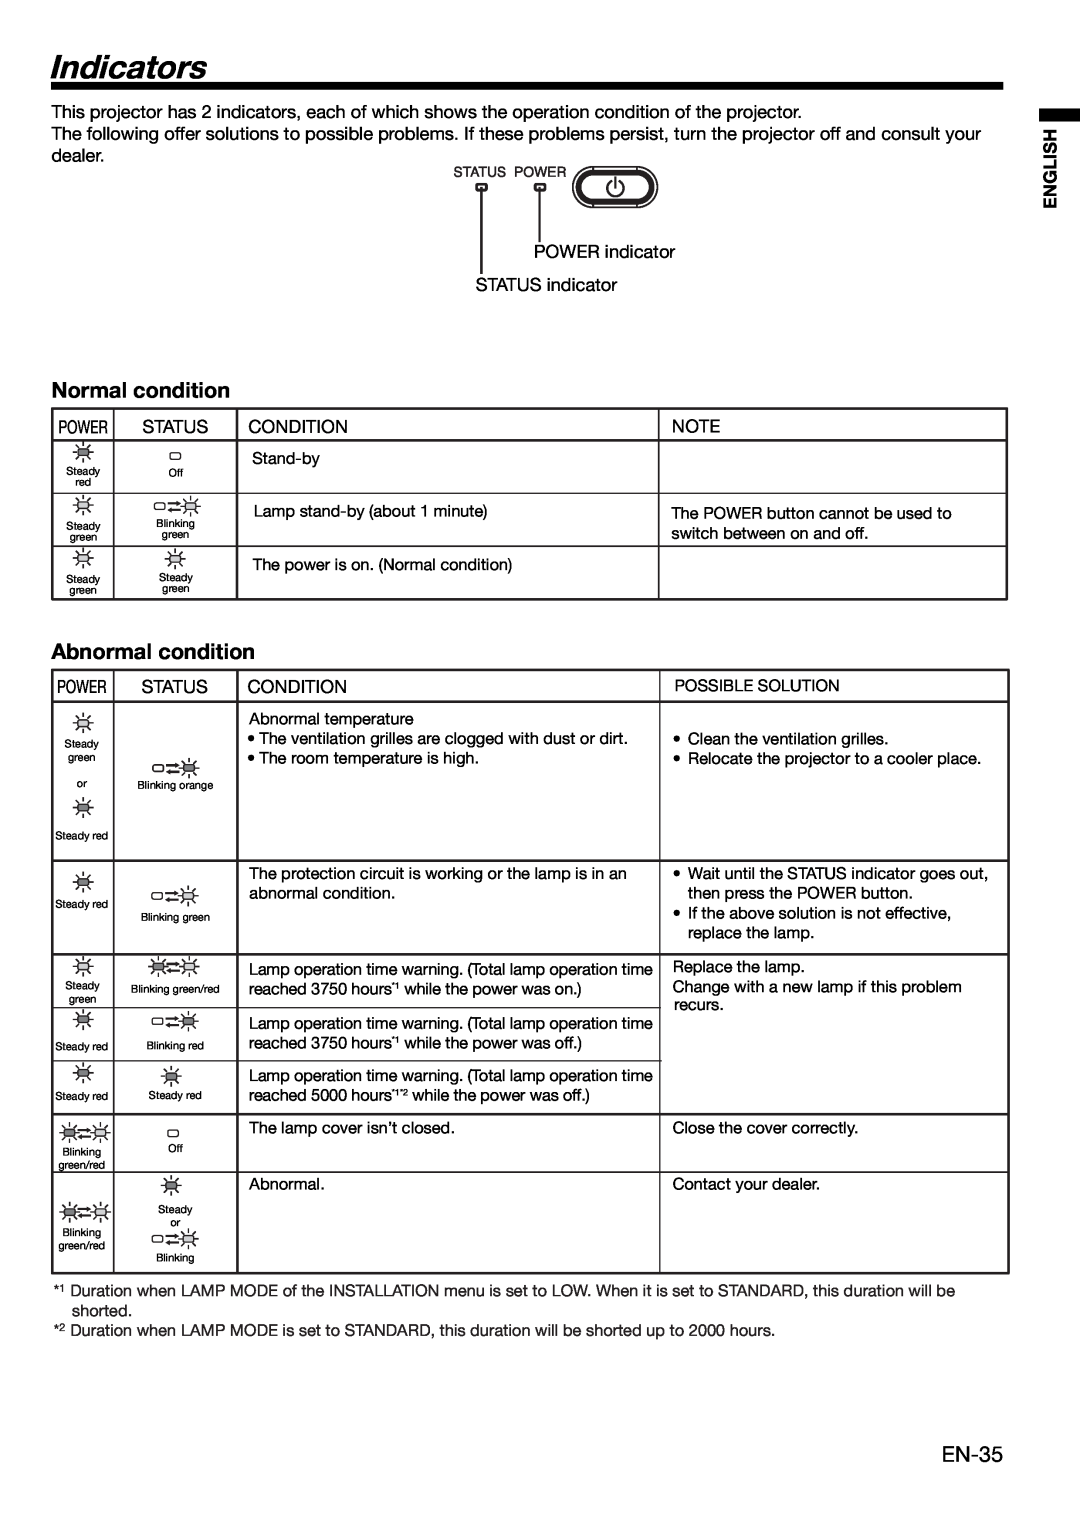 Mitsubishi Electronics XL650U user manual Indicators, Normal condition, Abnormal condition, English 